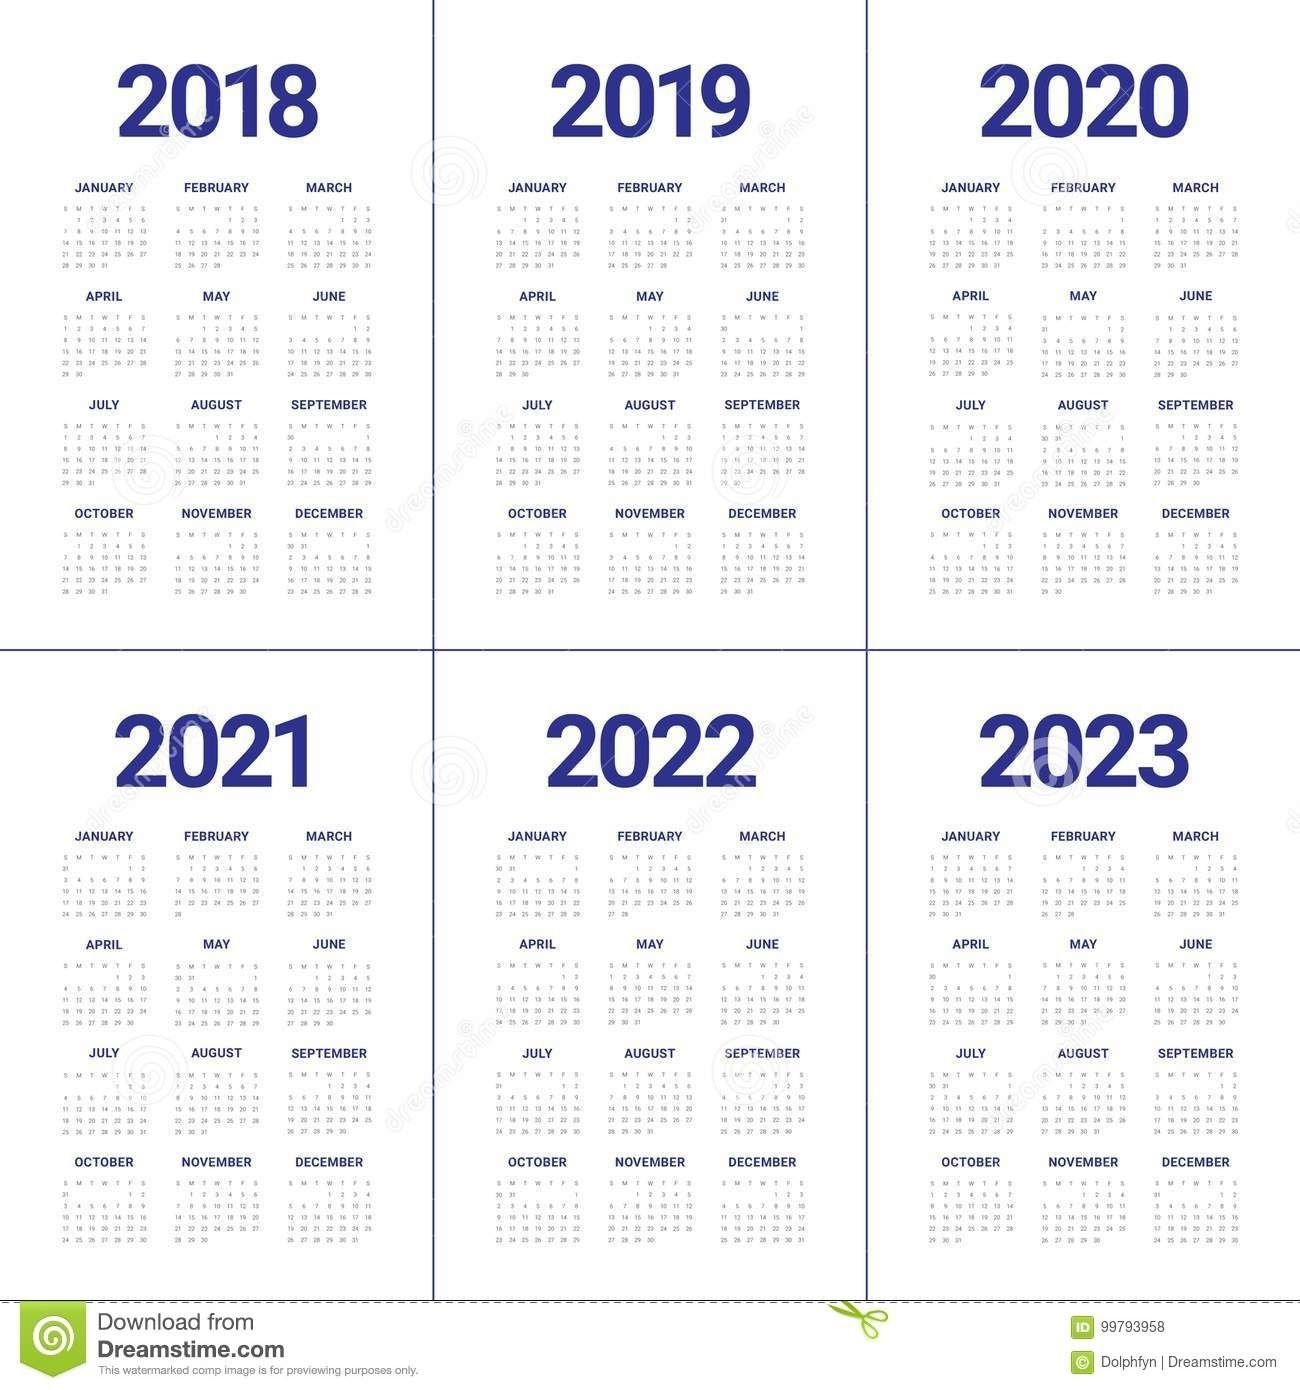 2021 2022 2023 Thrre Year Calendar Ireland | Ten Free